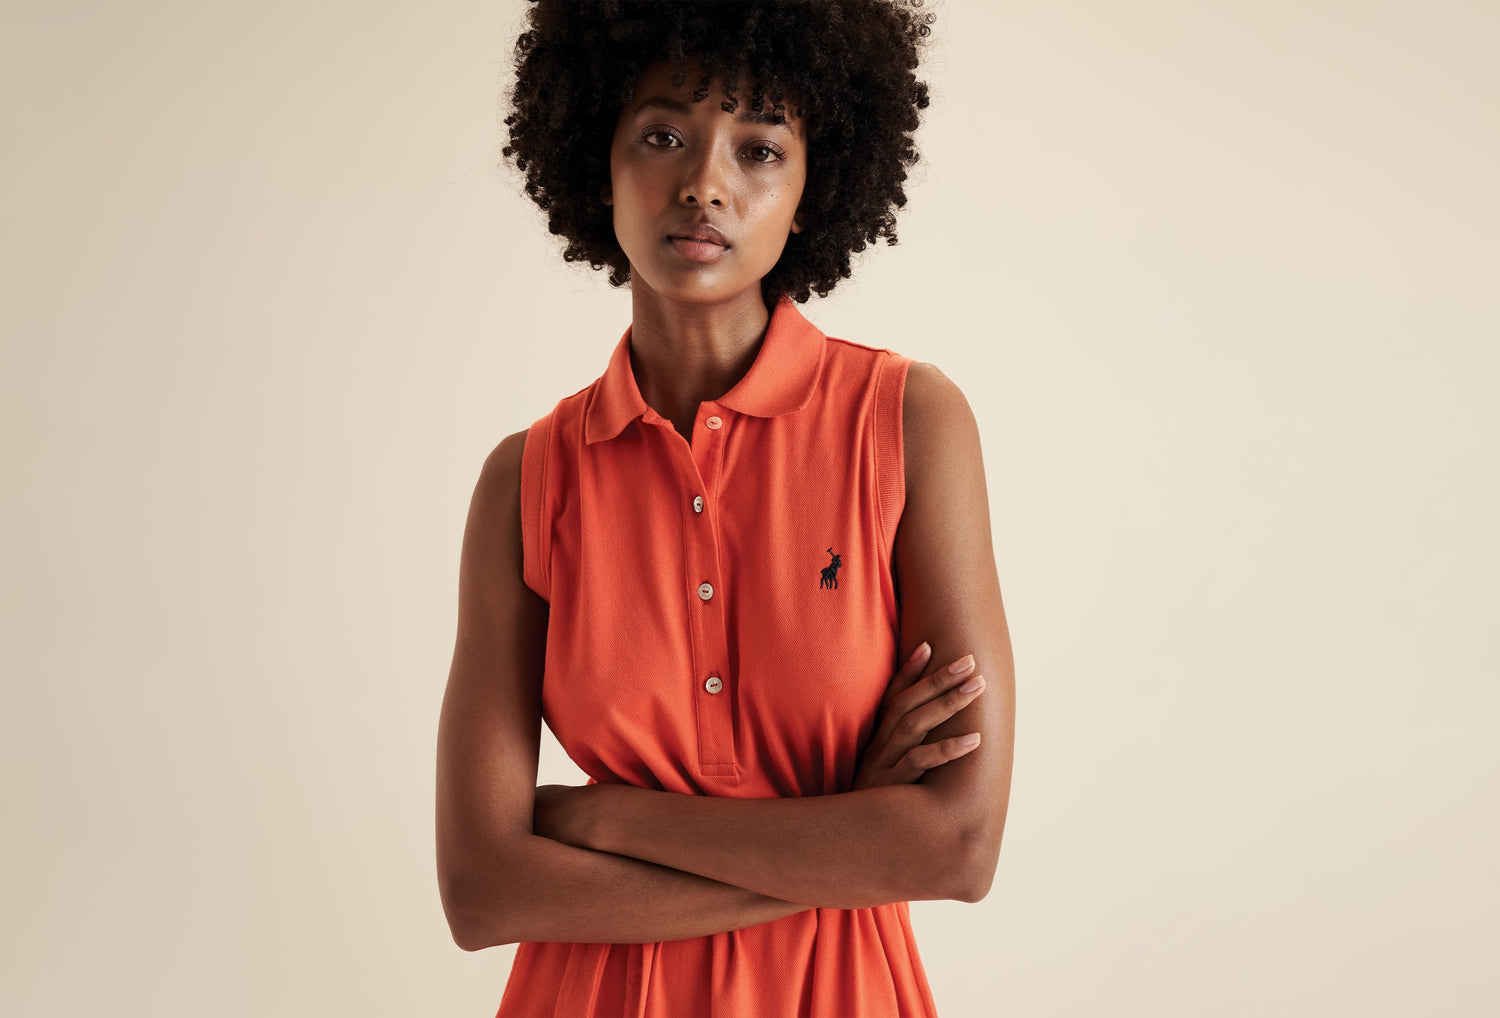 Lady in orange Polo dress. Shop women's clothing at Options Botswana.